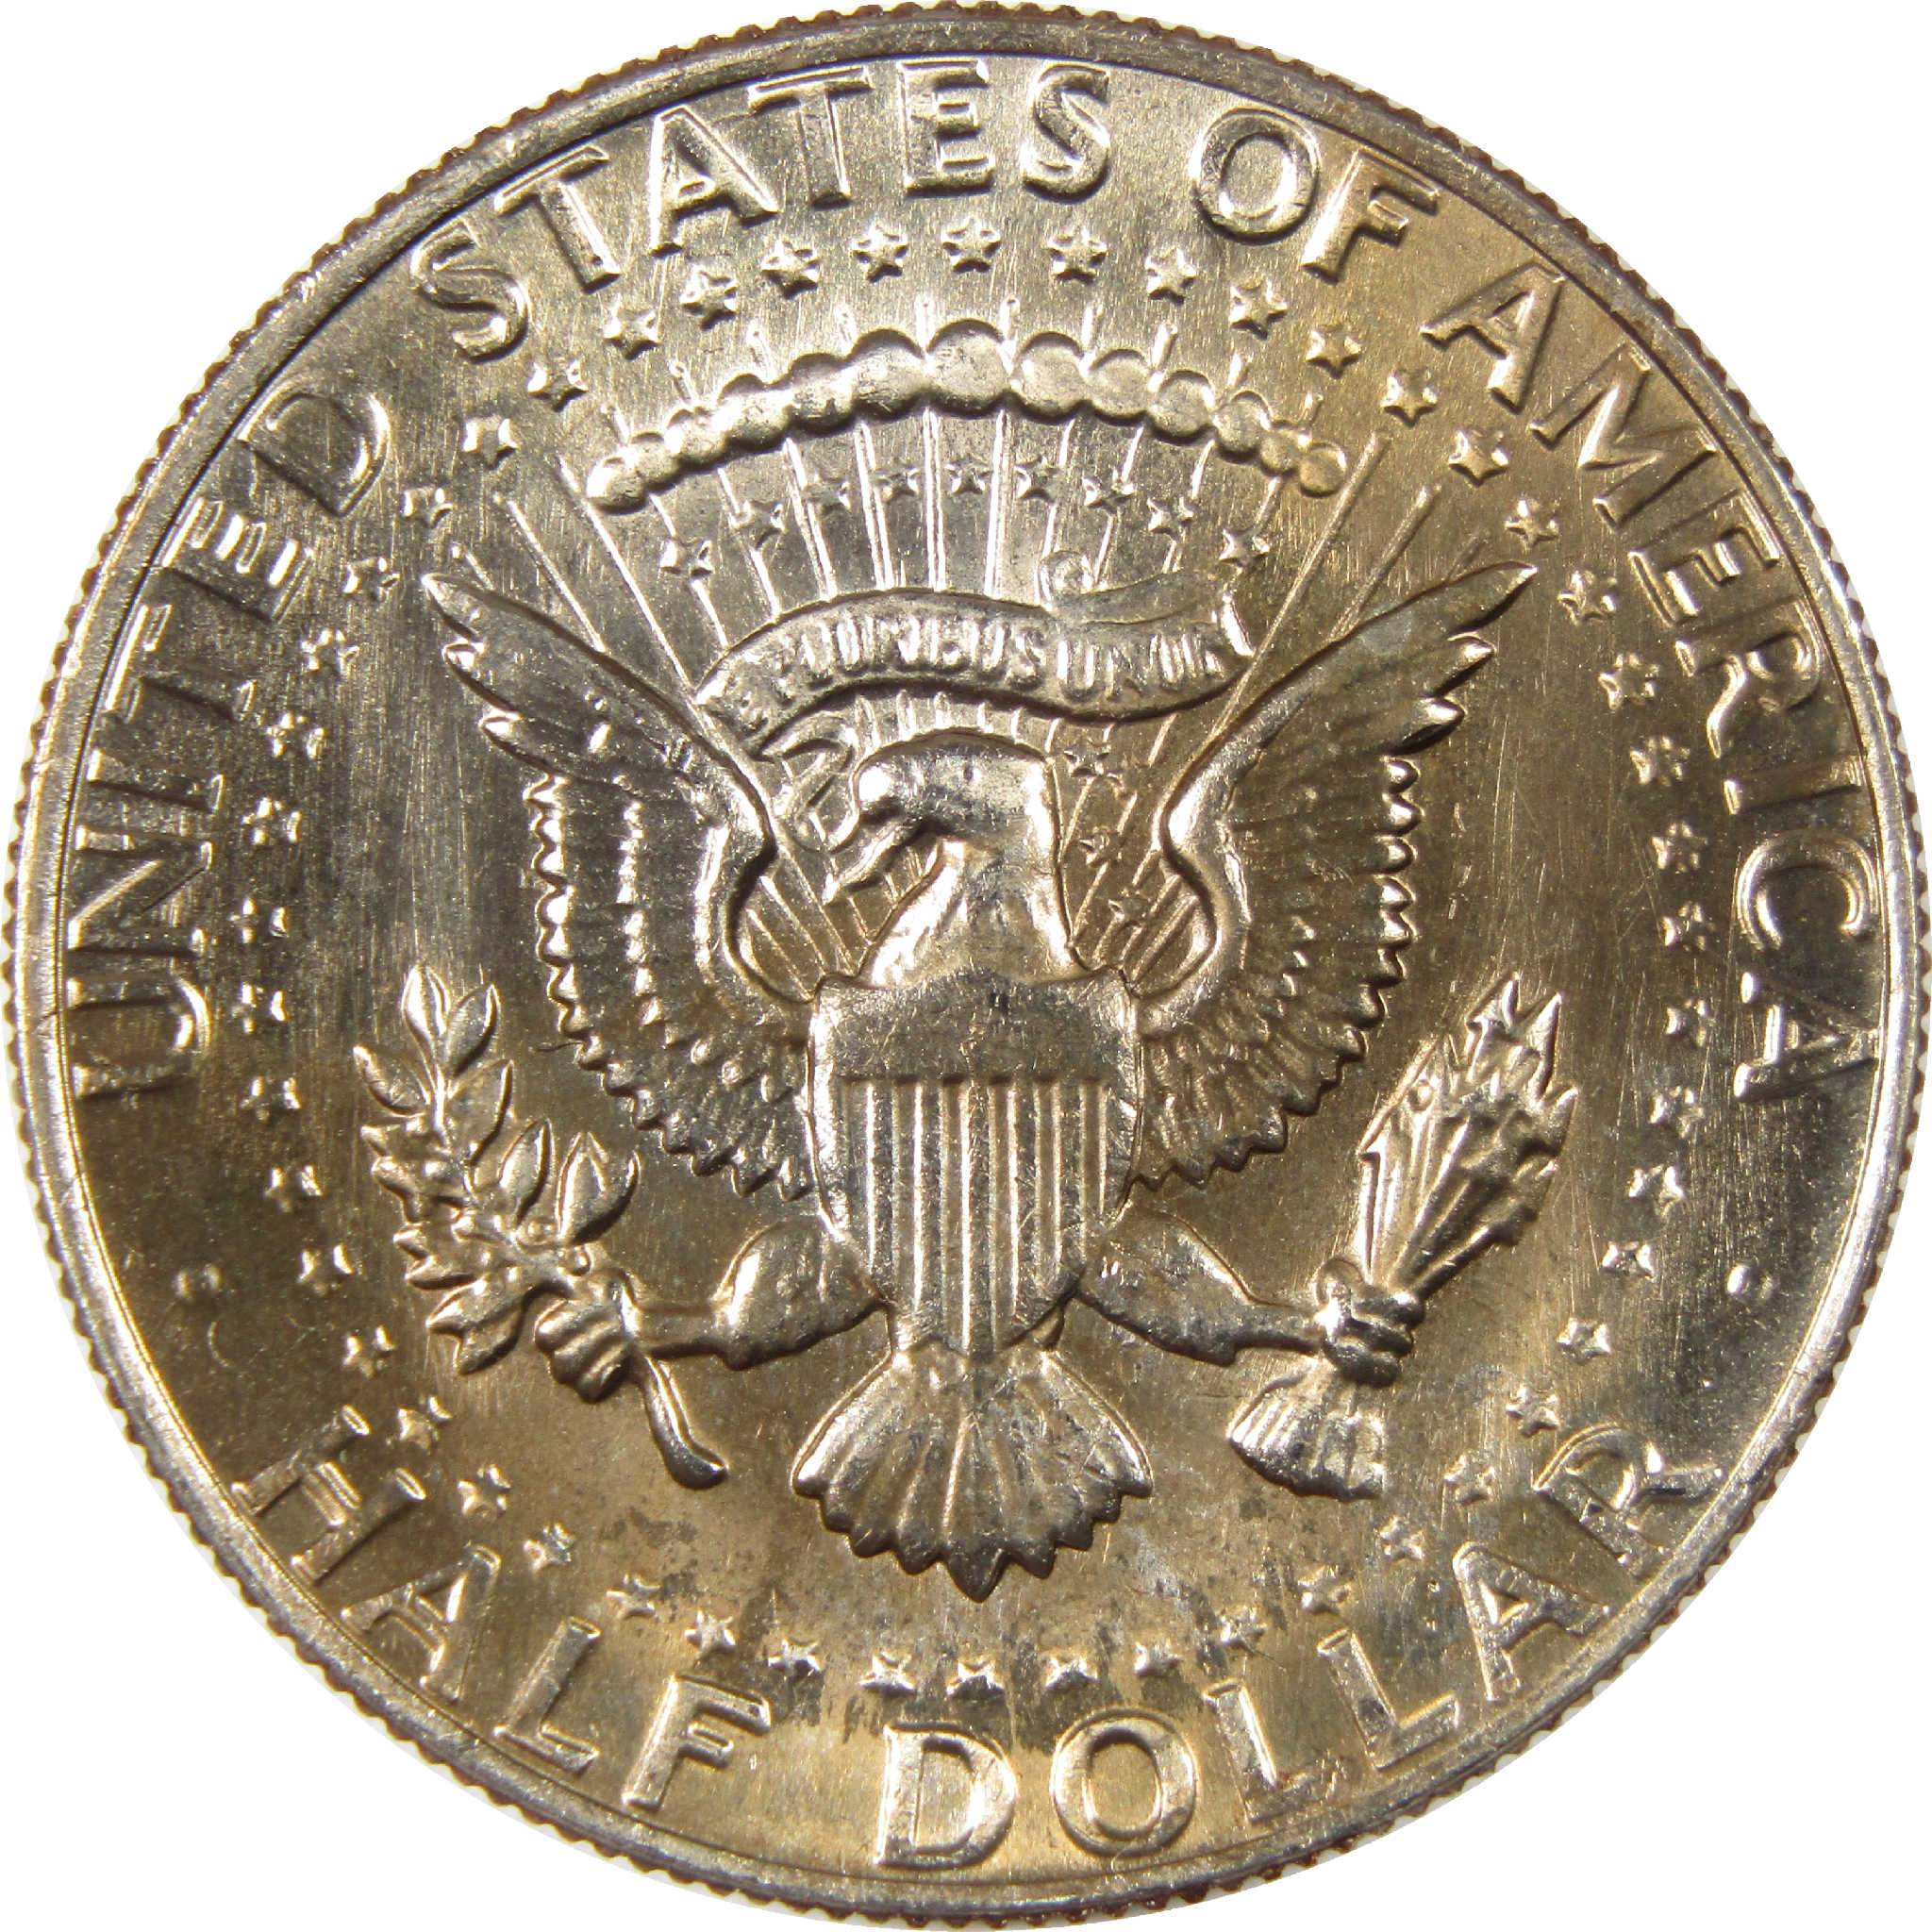 1982 P Kennedy Half Dollar Uncirculated Clad 50c Coin